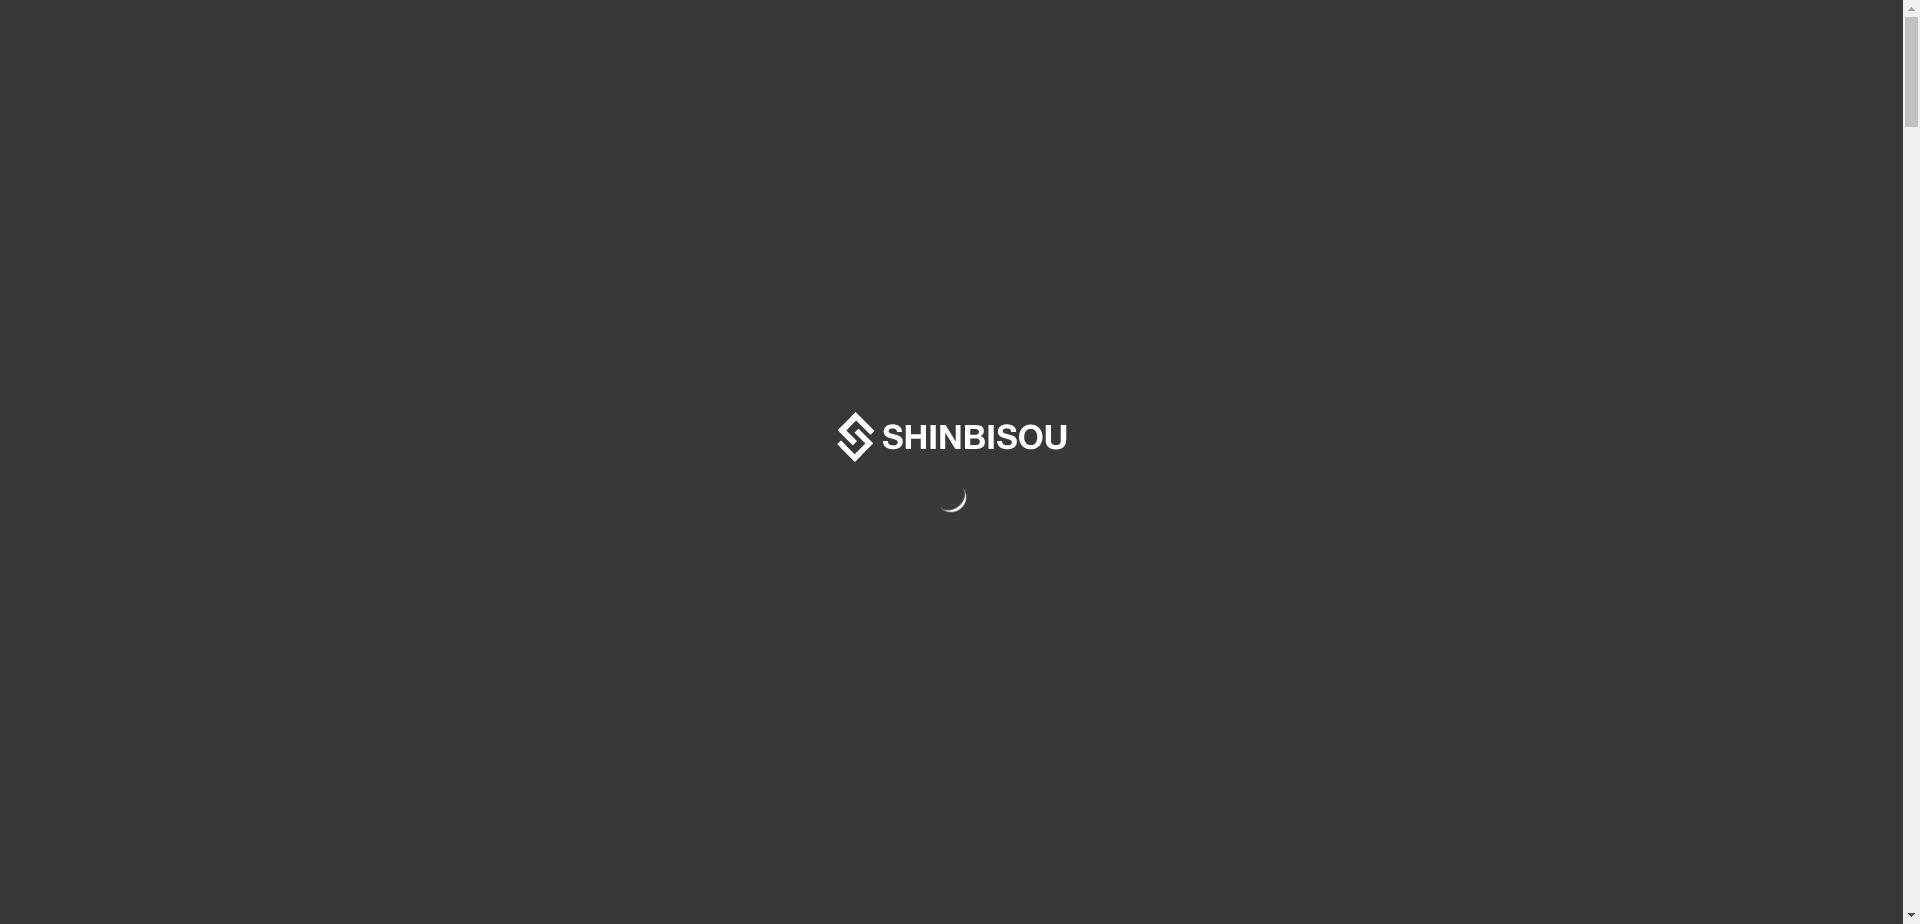 SHINBISOU